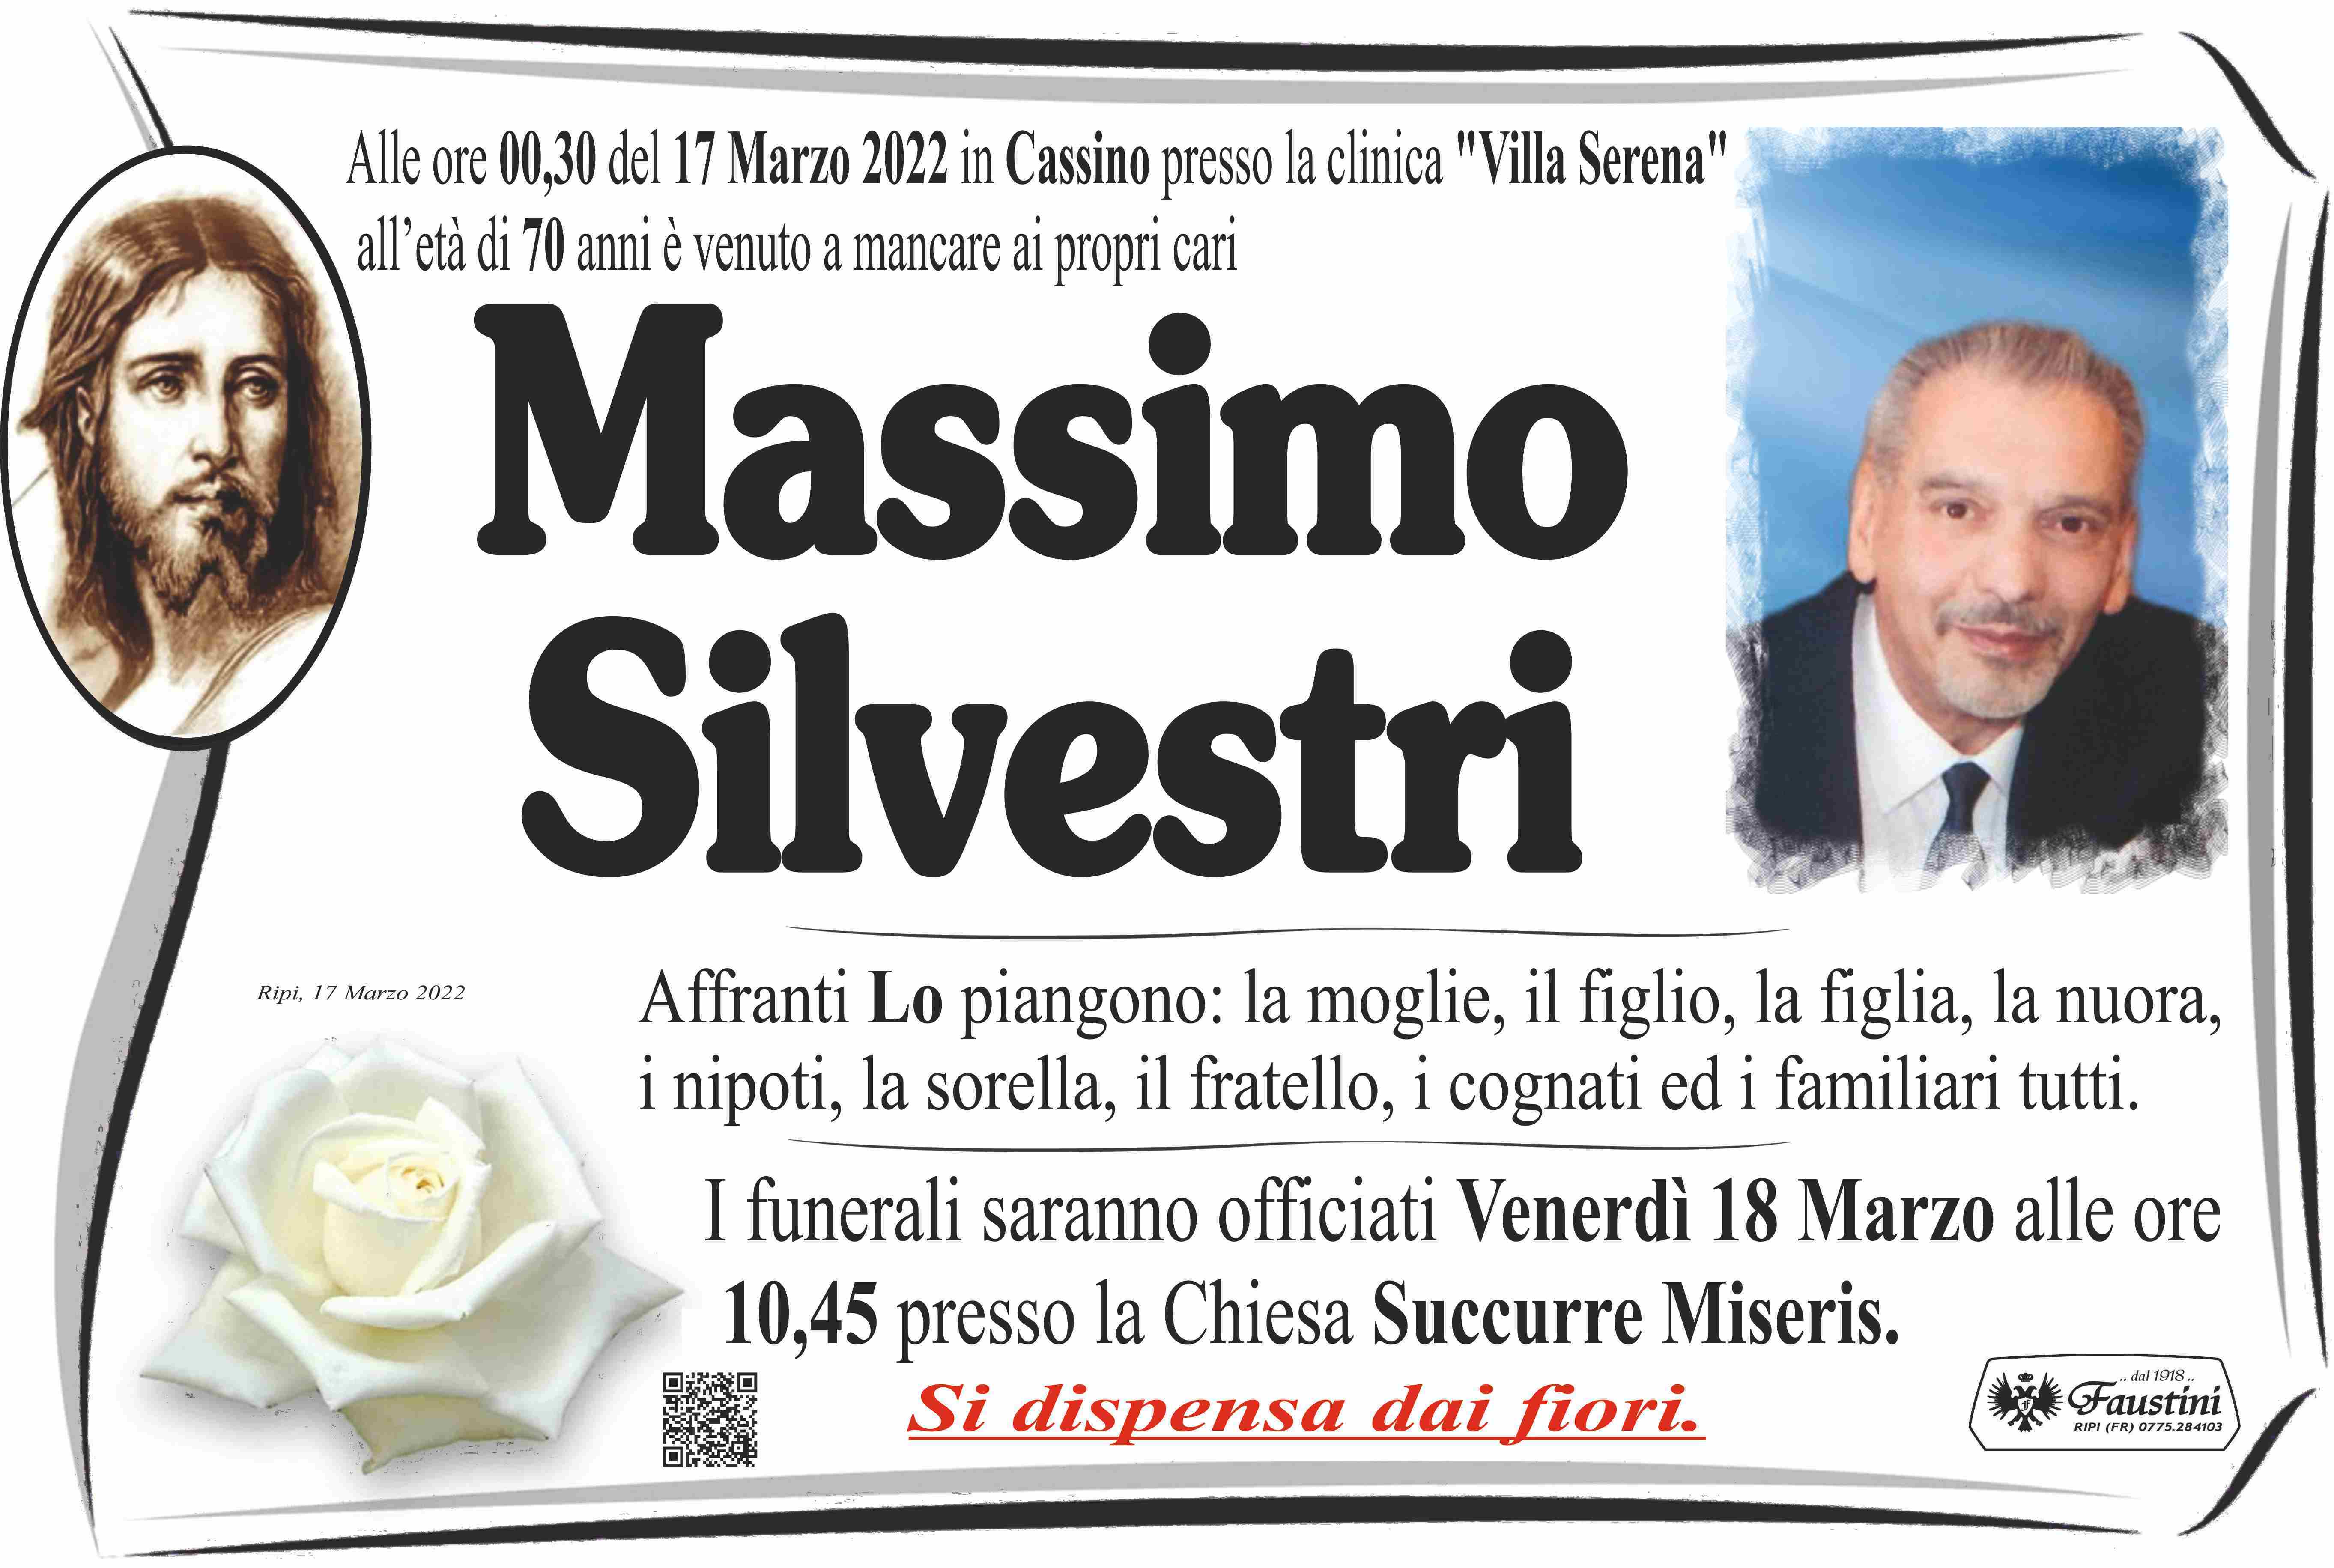 Massimo Silvestri